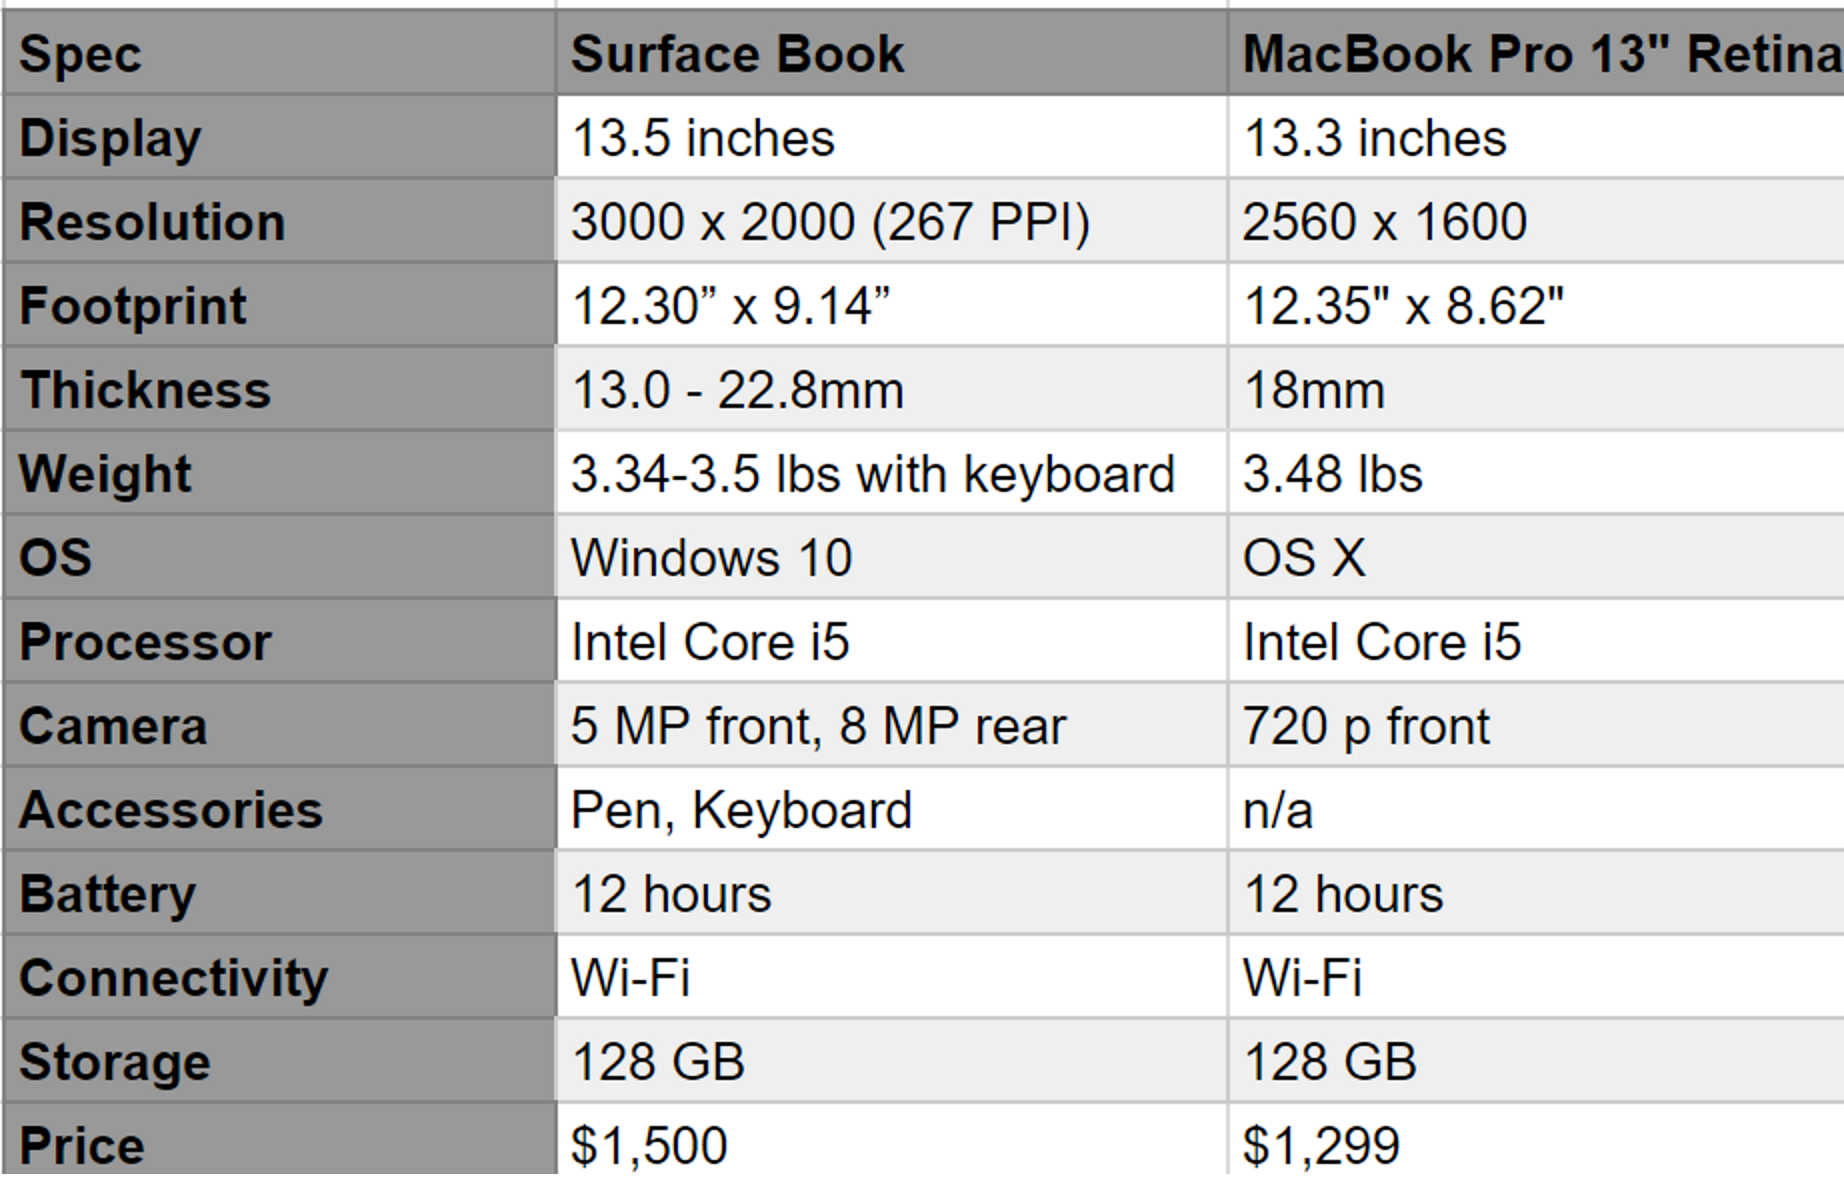 Microsoft Surface Vs. MacBook: A Head-to-Head Comparison